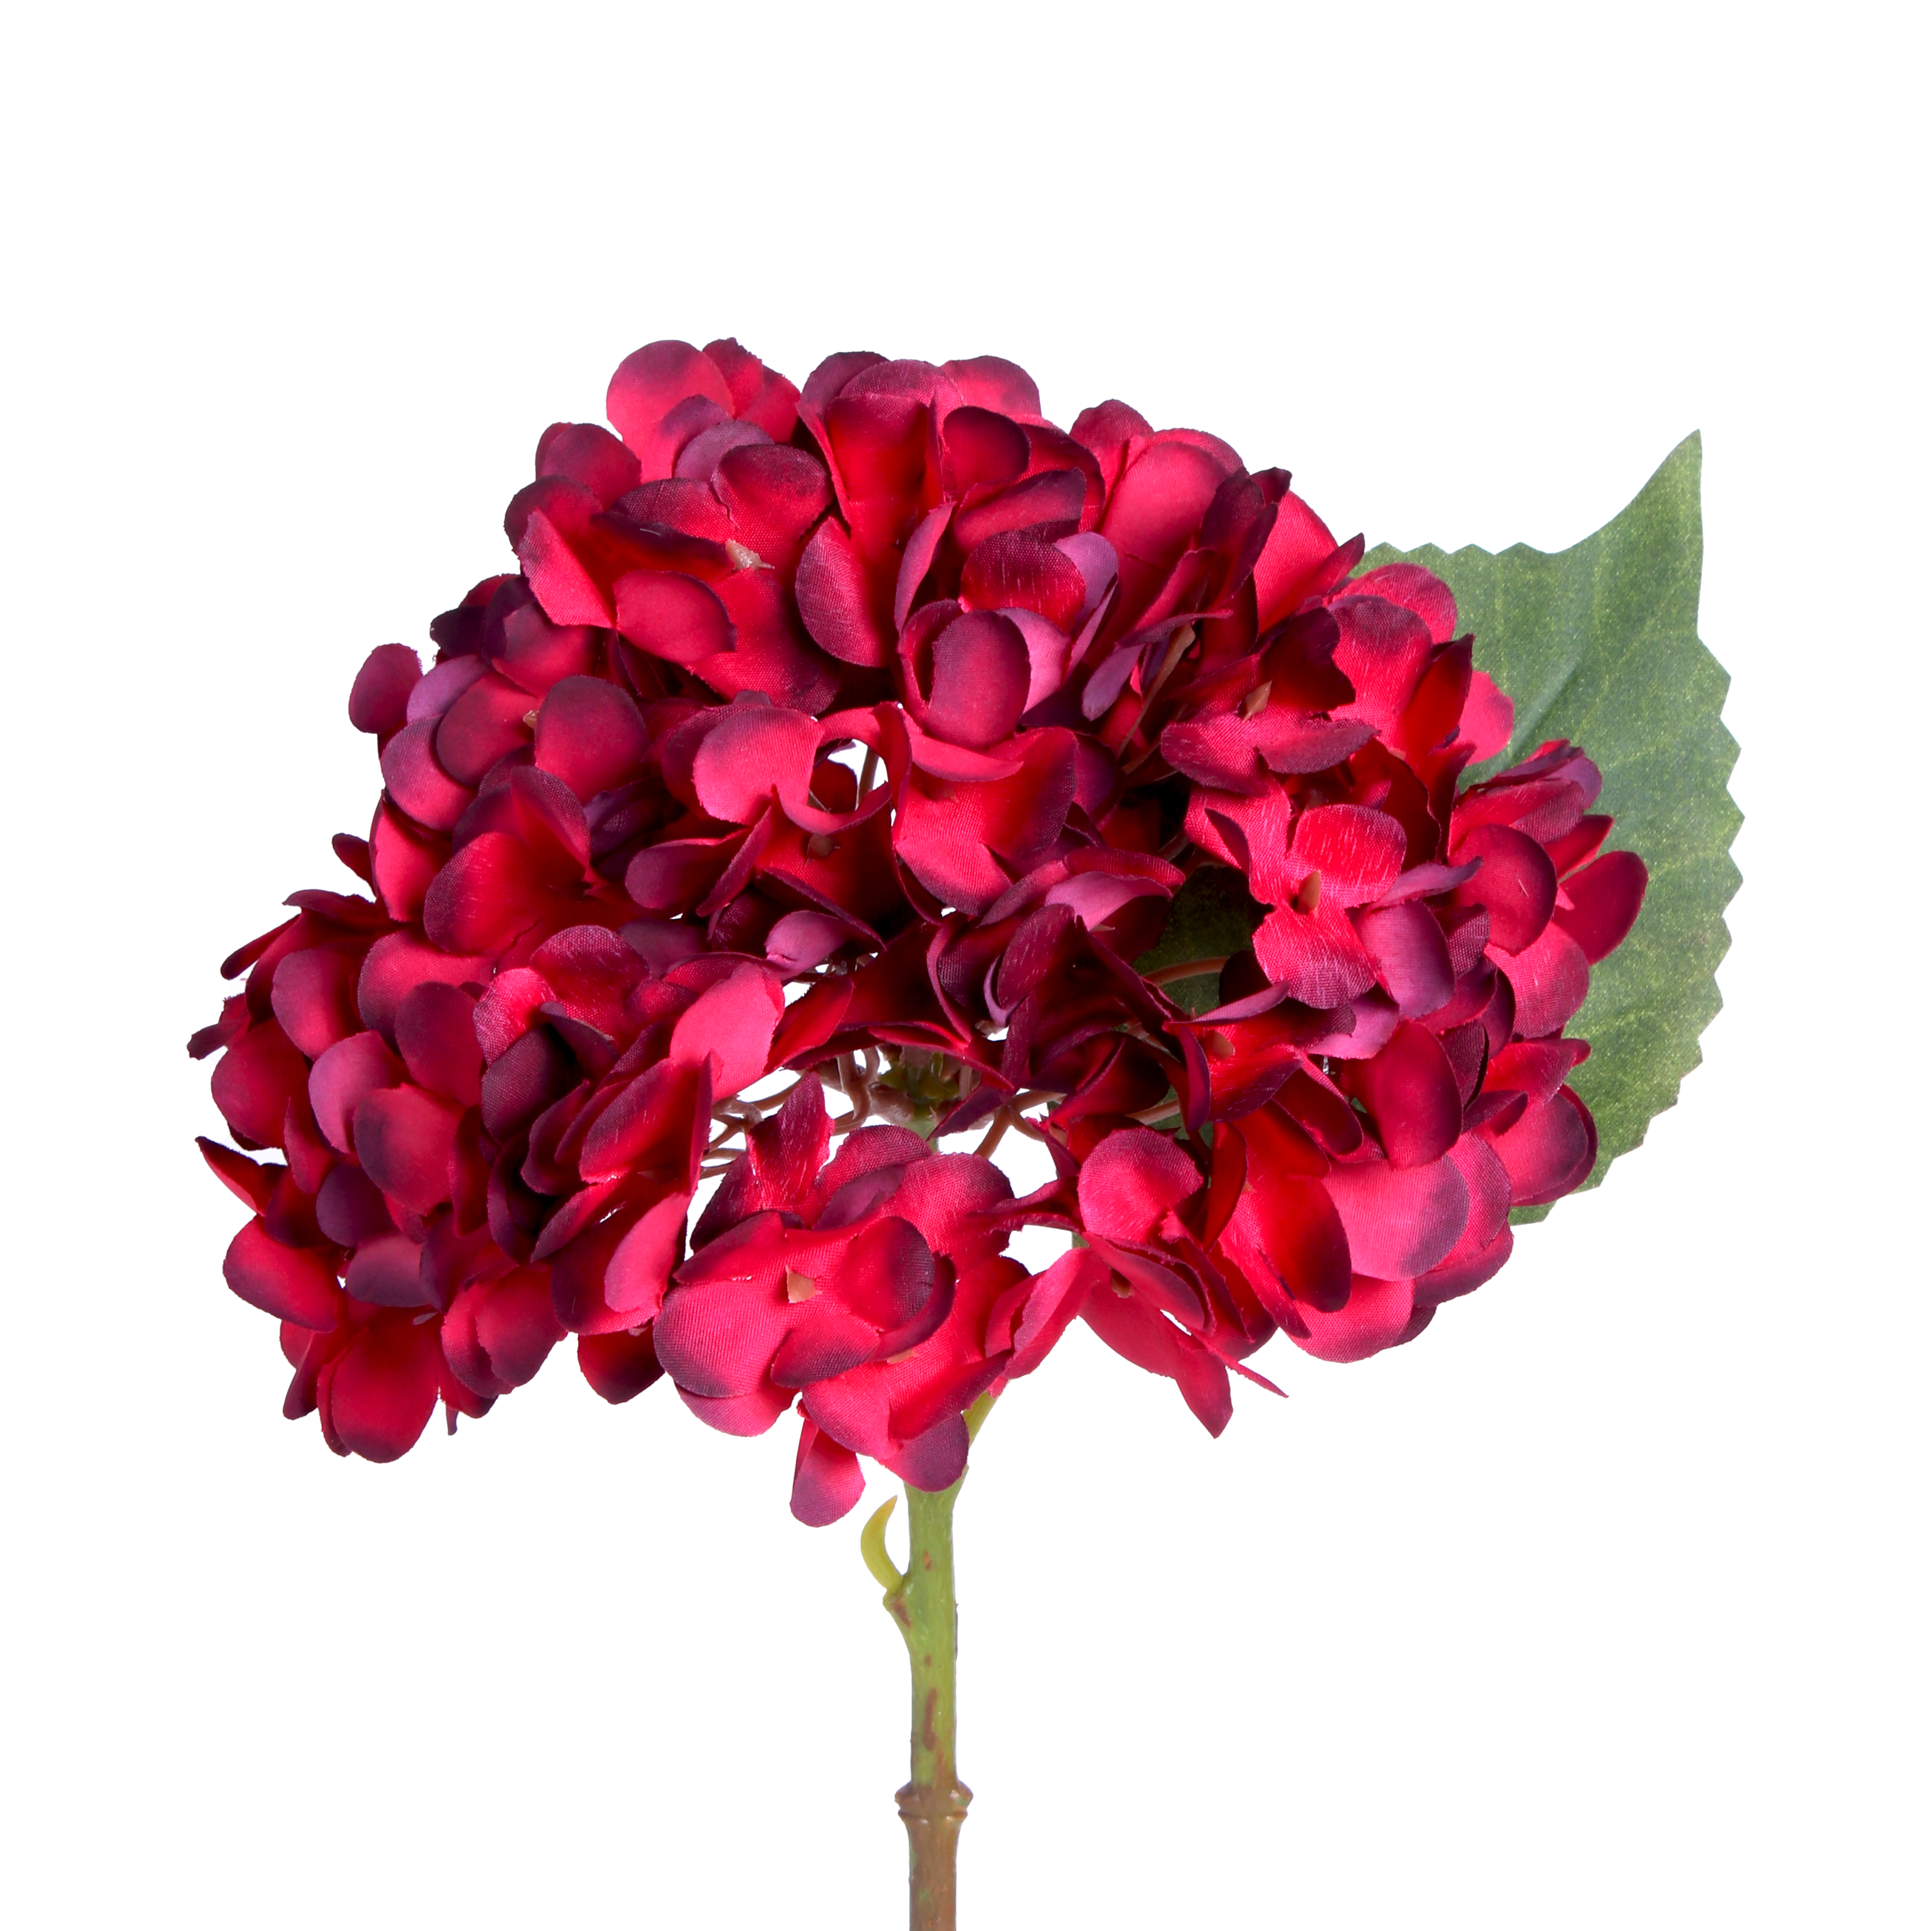 Artificial Flower Hydrangea Cherry Red 14Inch